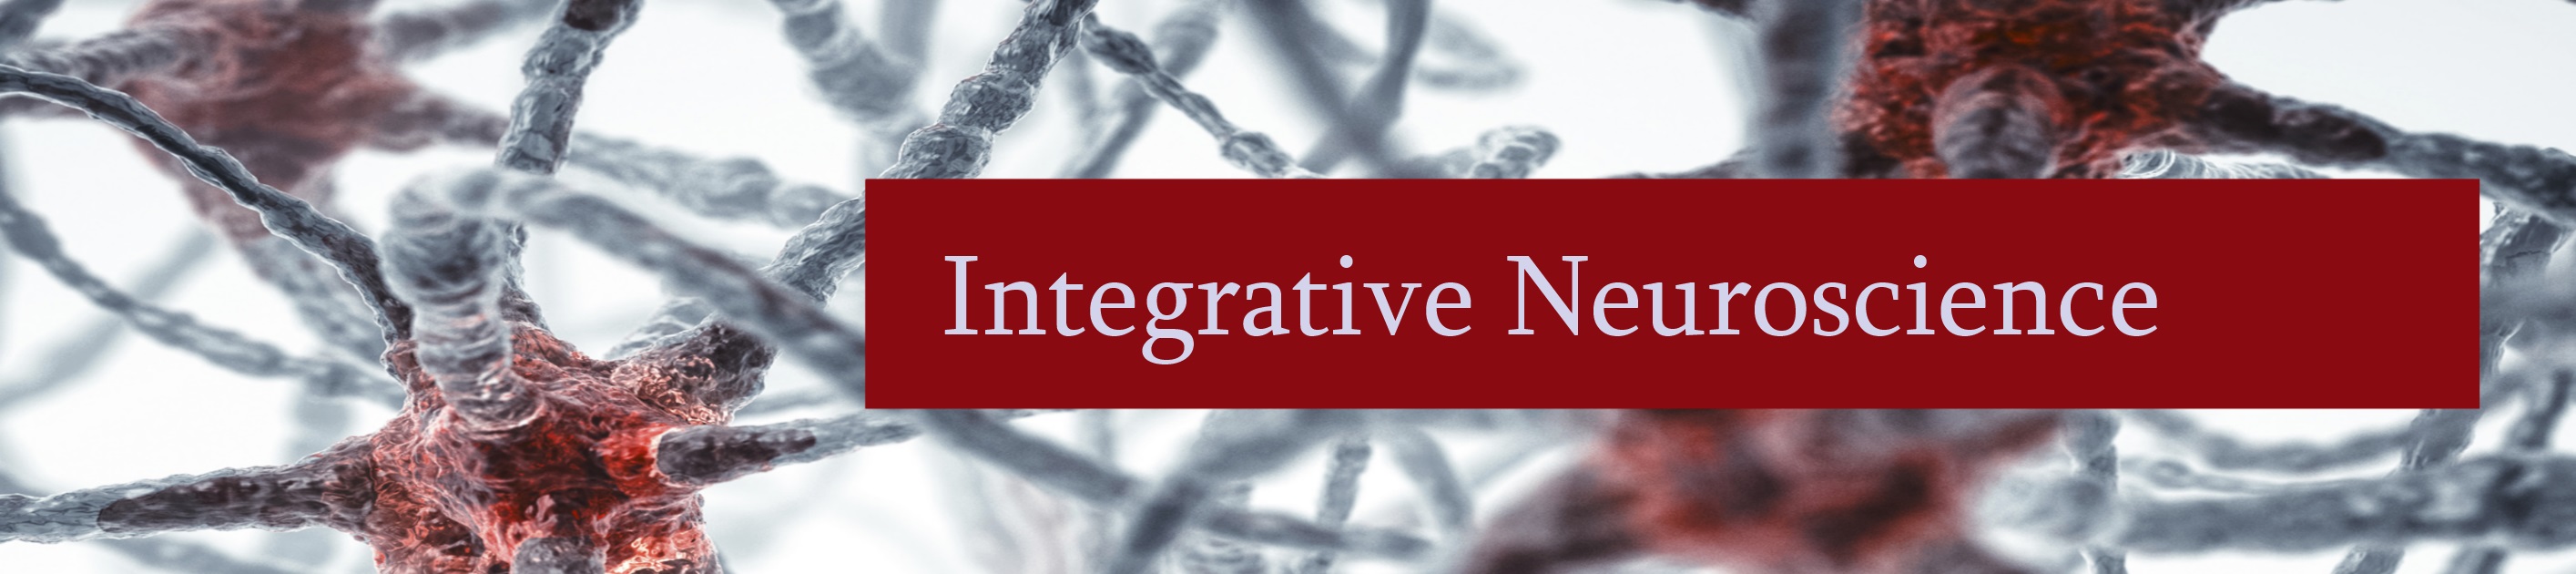 integrative neuroscience banner picture